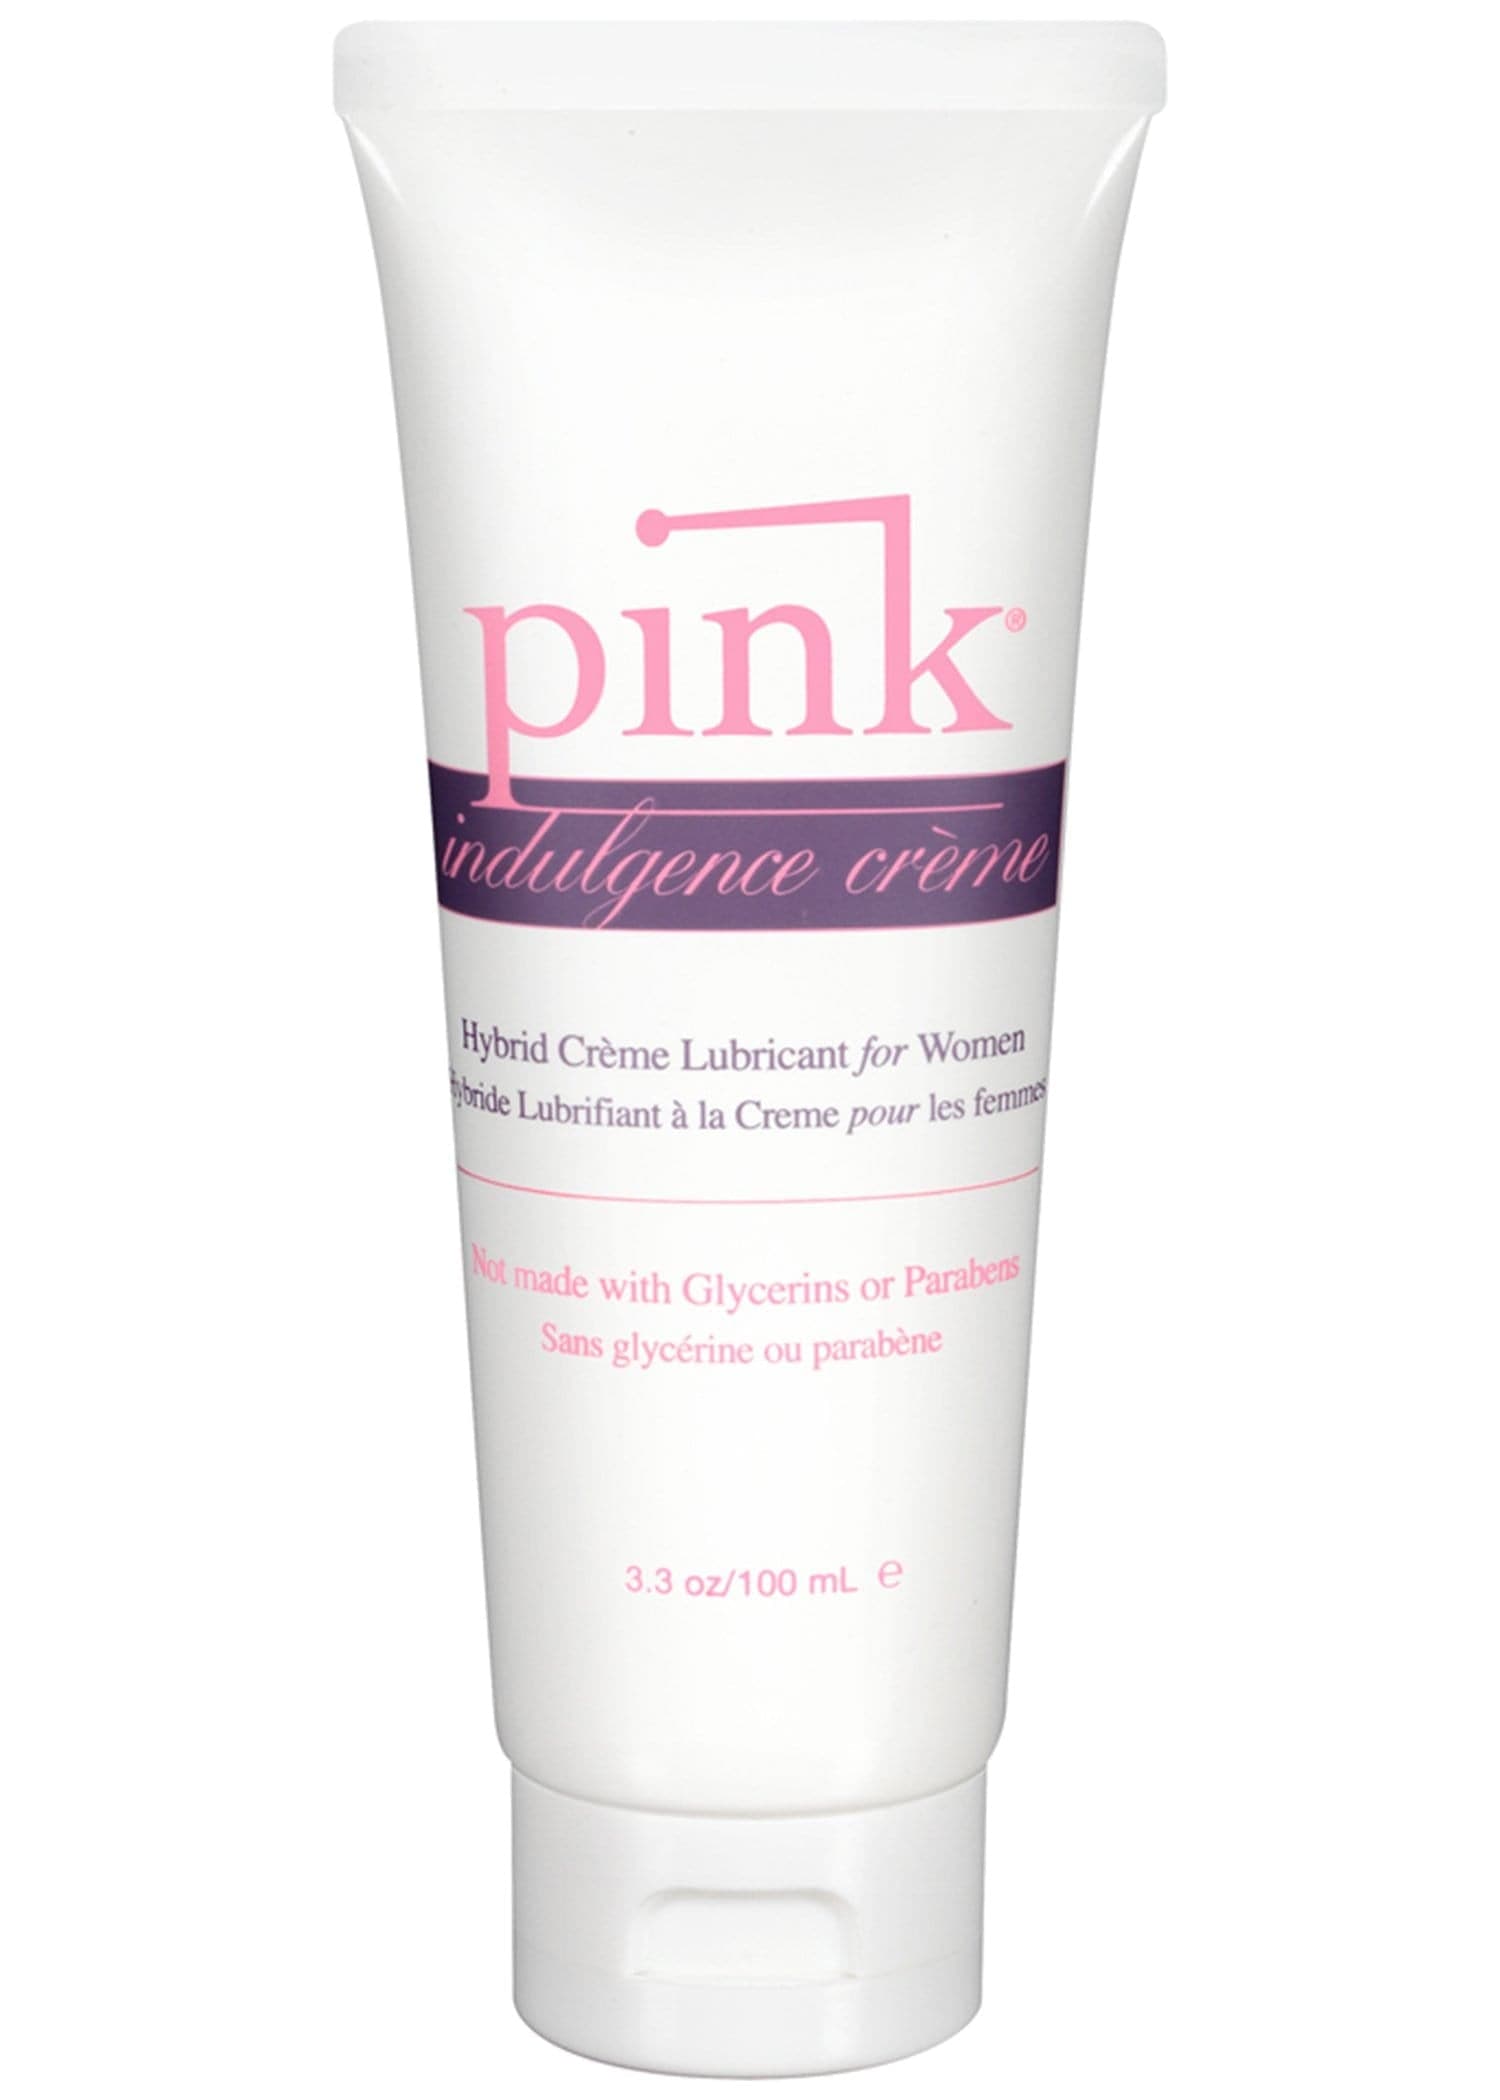 pink indulgence creme hybrid lubricant for women 3 3 oz 100 ml